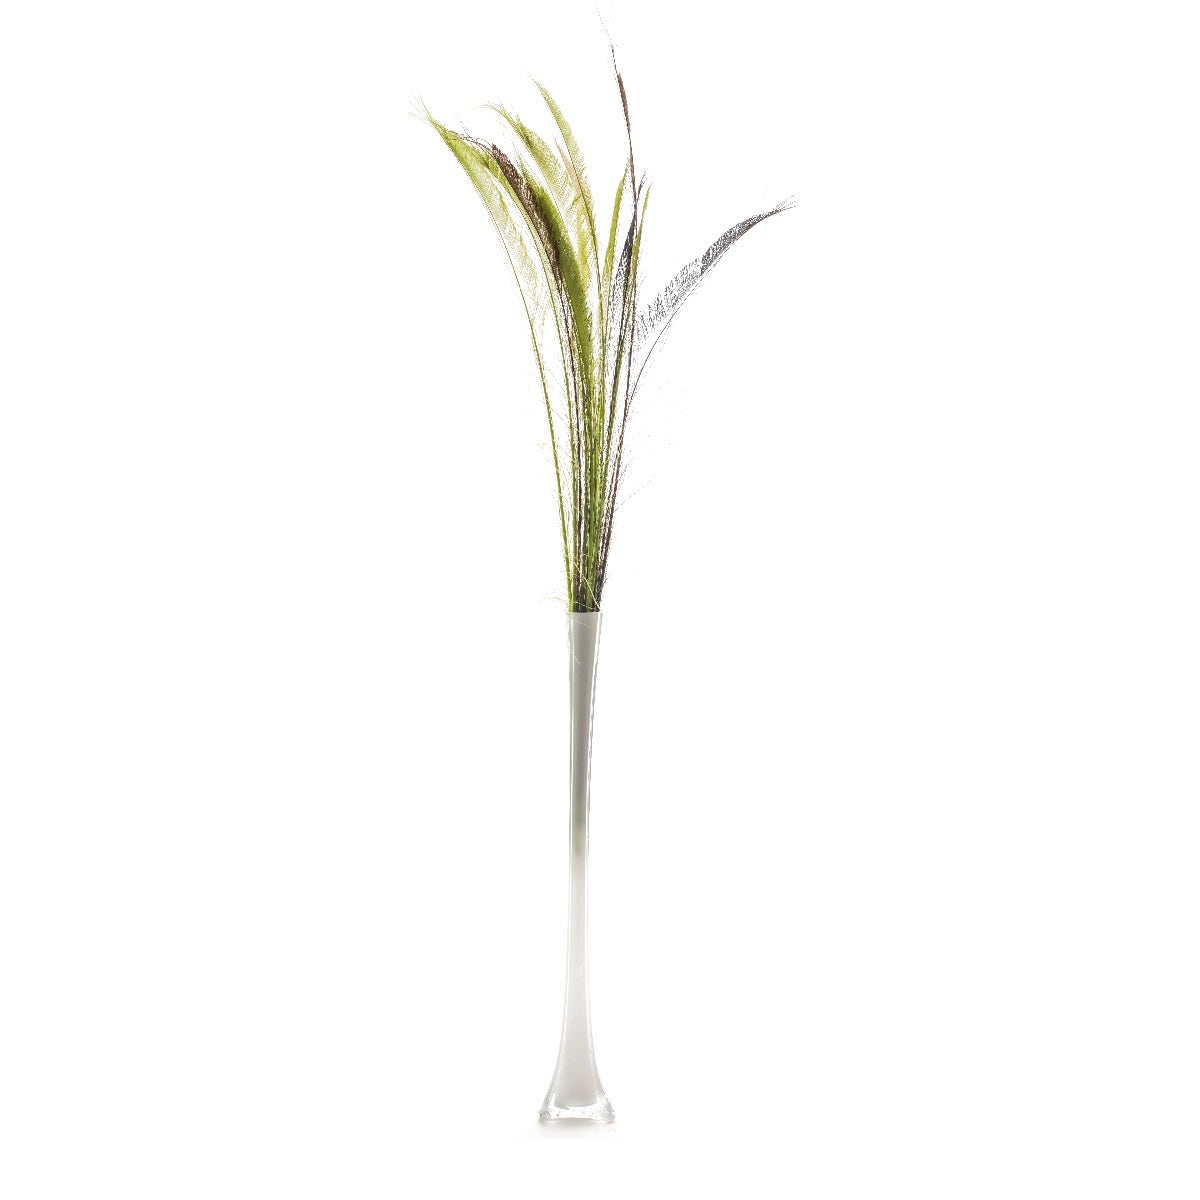 White Eiffel Tower Glass Vase 24 Inches | Buy Wedding Centerpiece